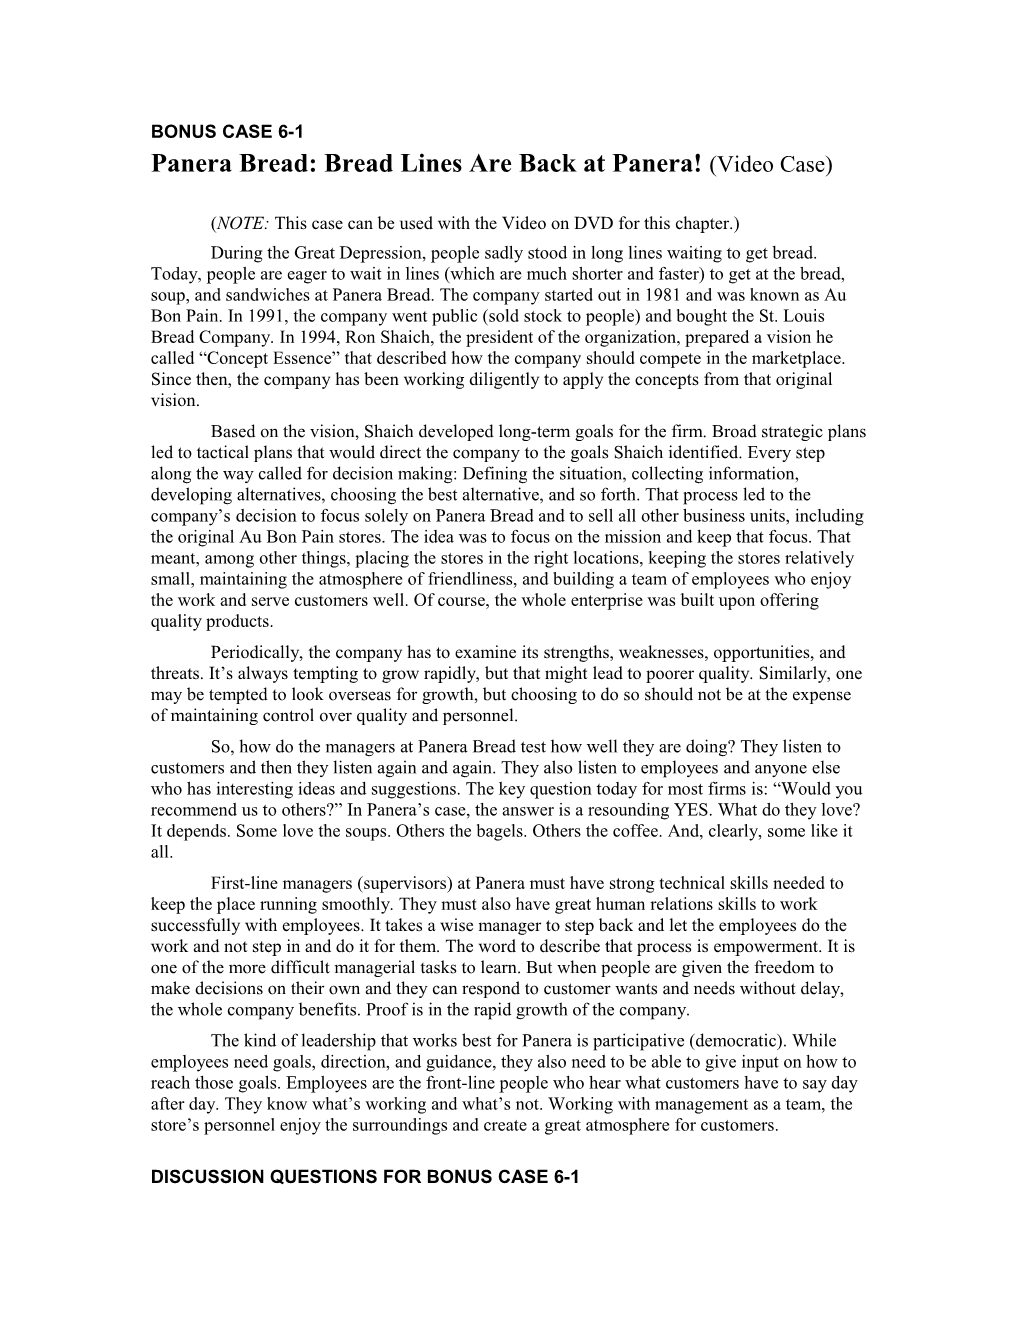 Panera Bread: Bread Lines Are Back at Panera! (Video Case)